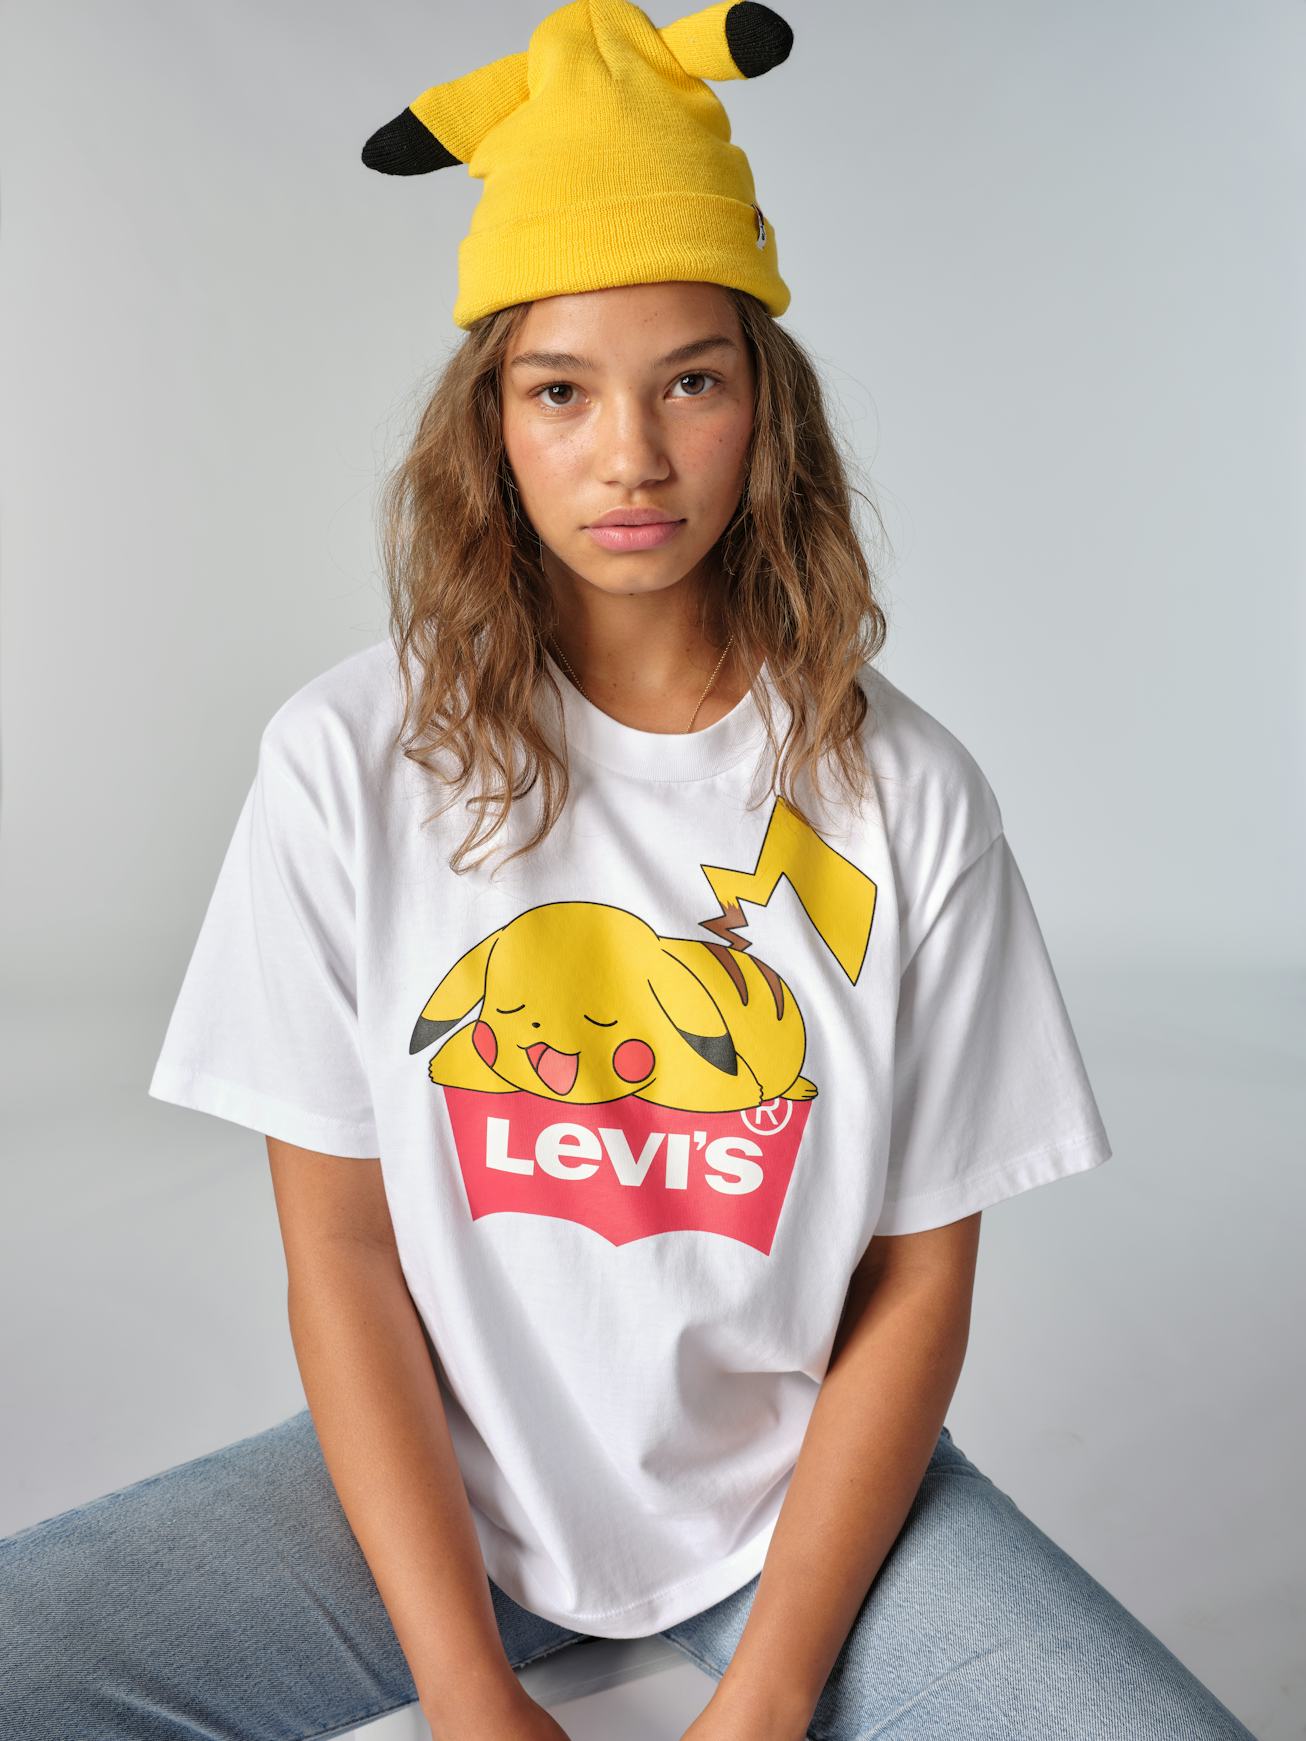 Levi's x Pokemon collaboration collection